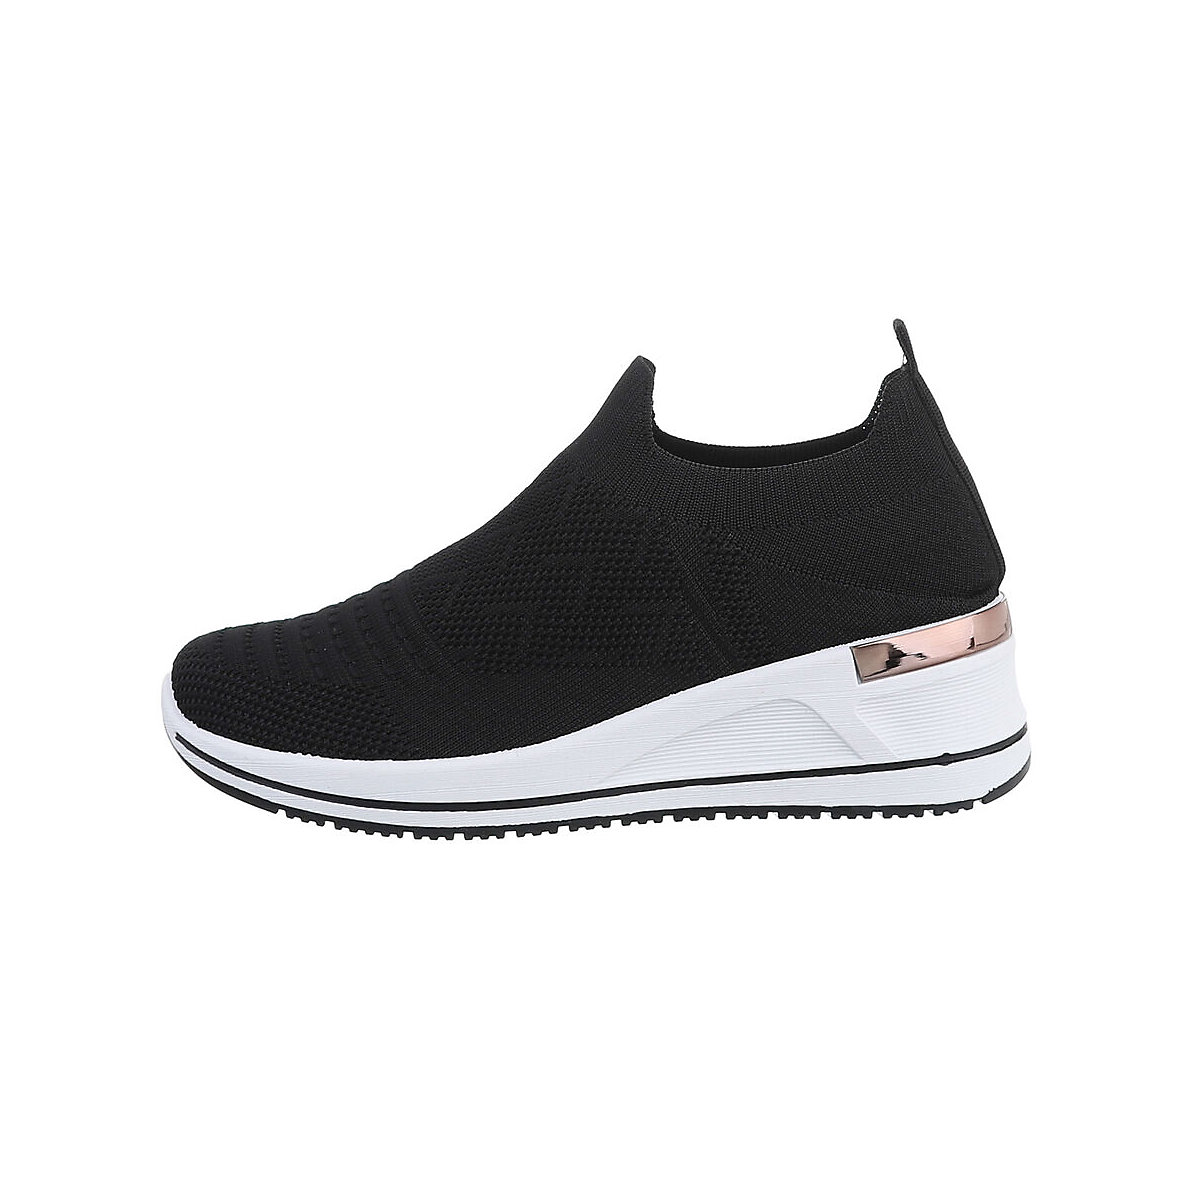 Ital-Design Sneakers Low Keilabsatz/Wedge schwarz/weiß